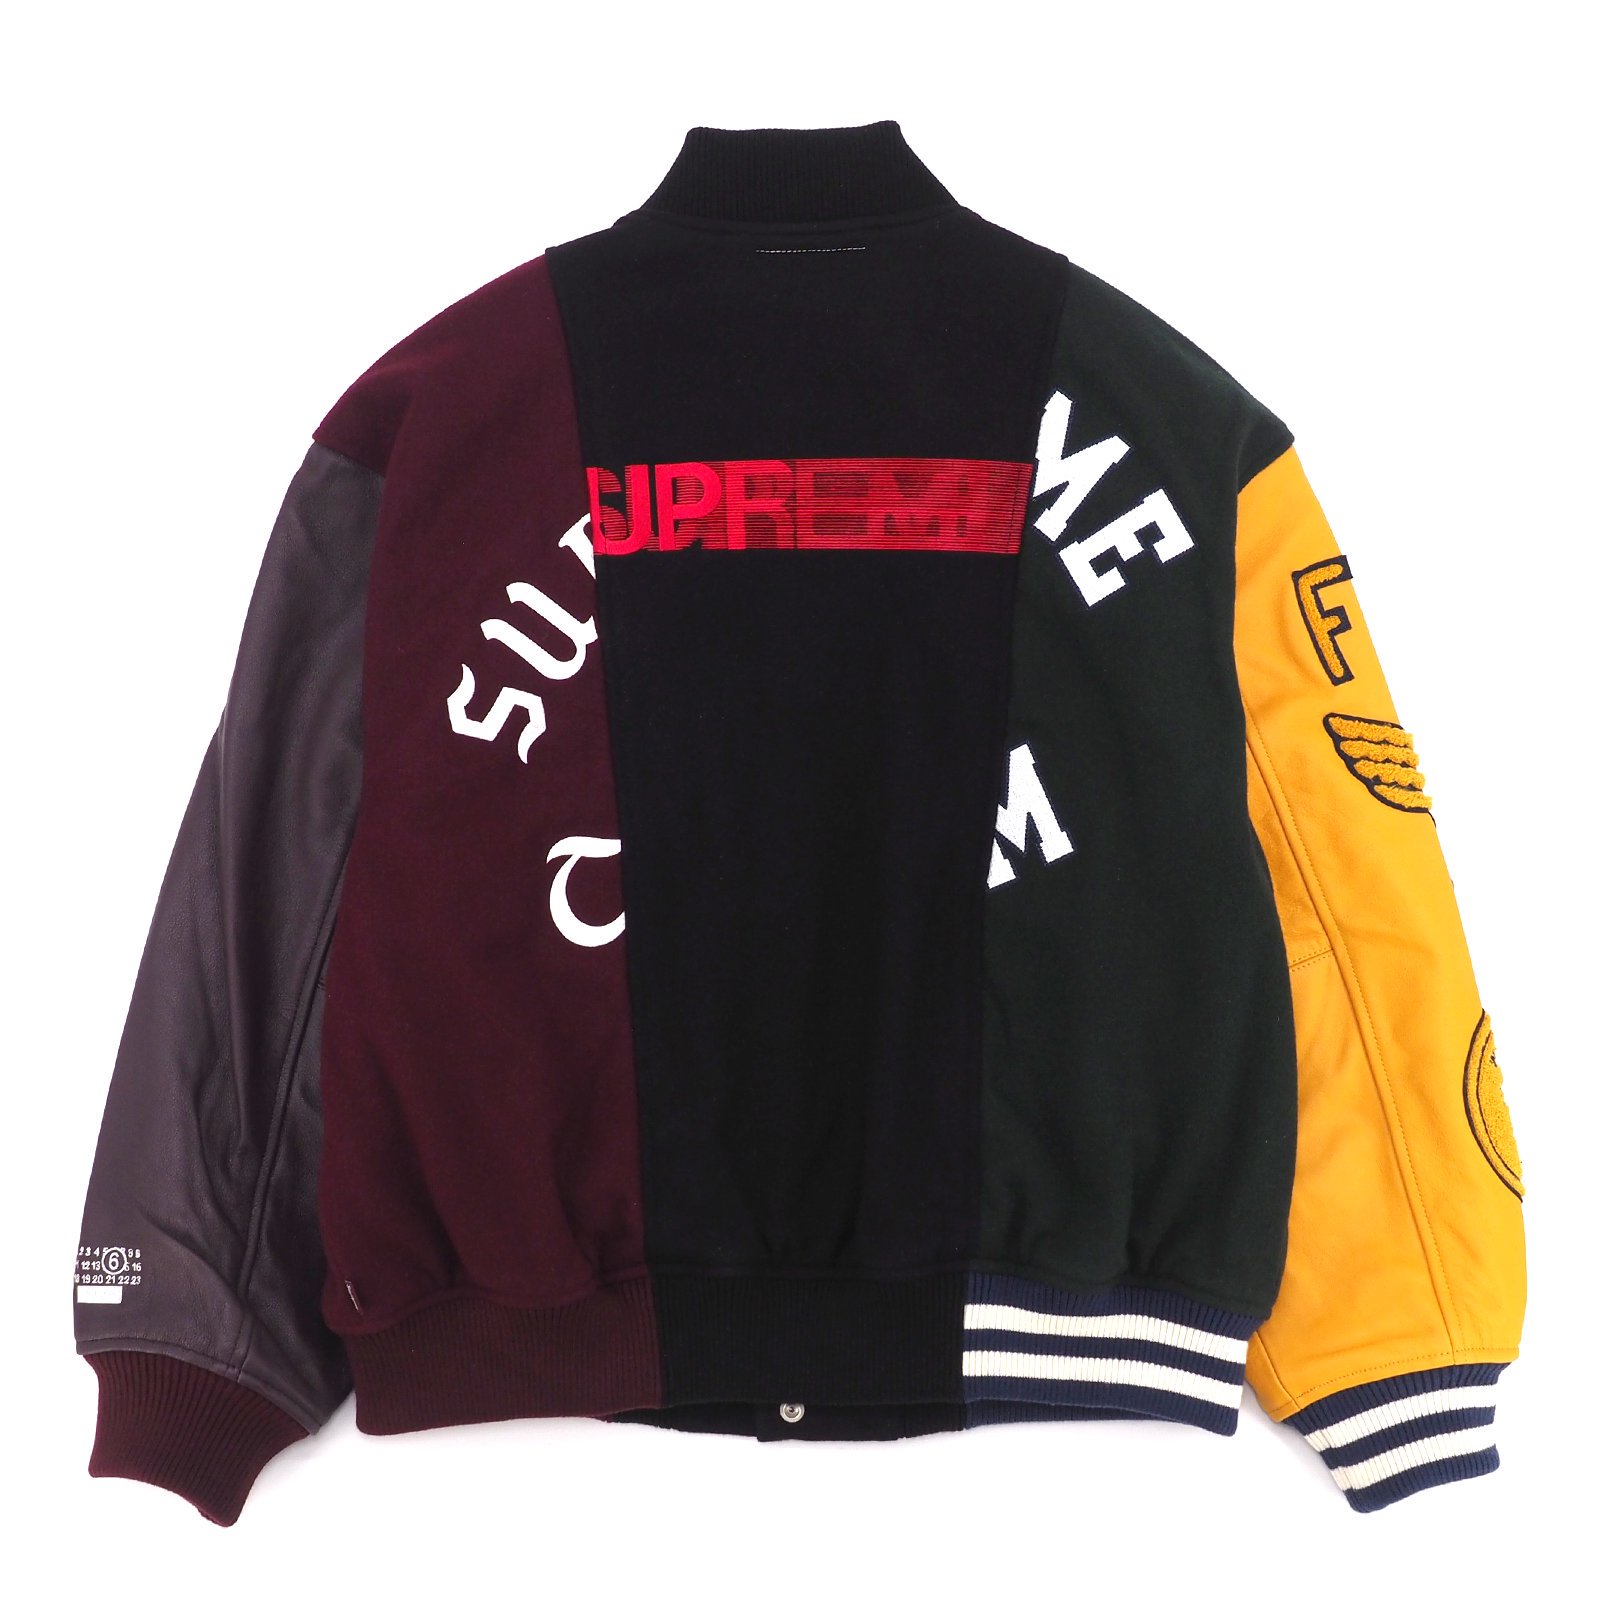 supremesupreme jacket Mサイズ